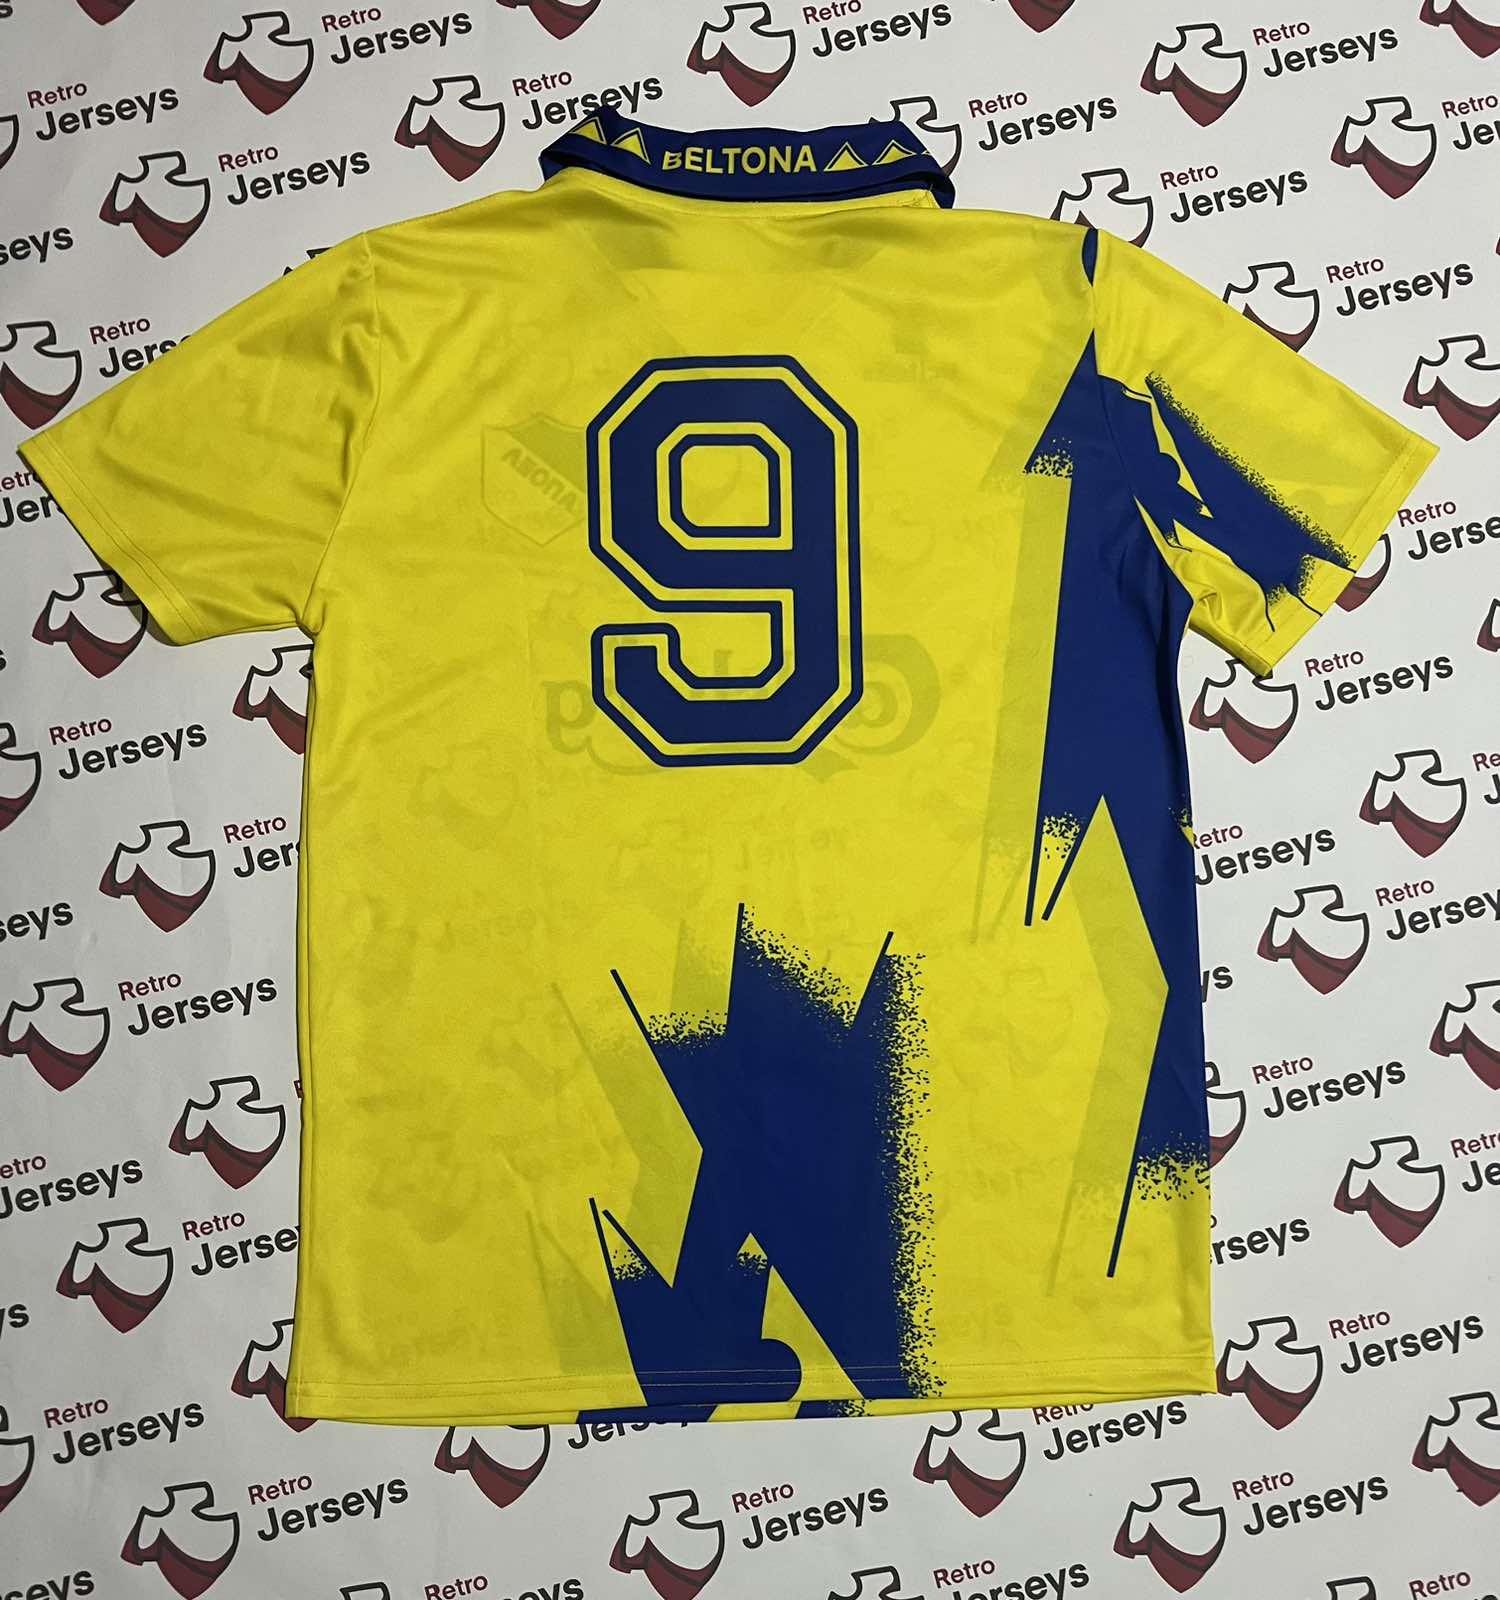 APOEL Nicosia Shirt 1995-1996 Home - Retro Jersey, φανέλα αποέλ – Retro ...